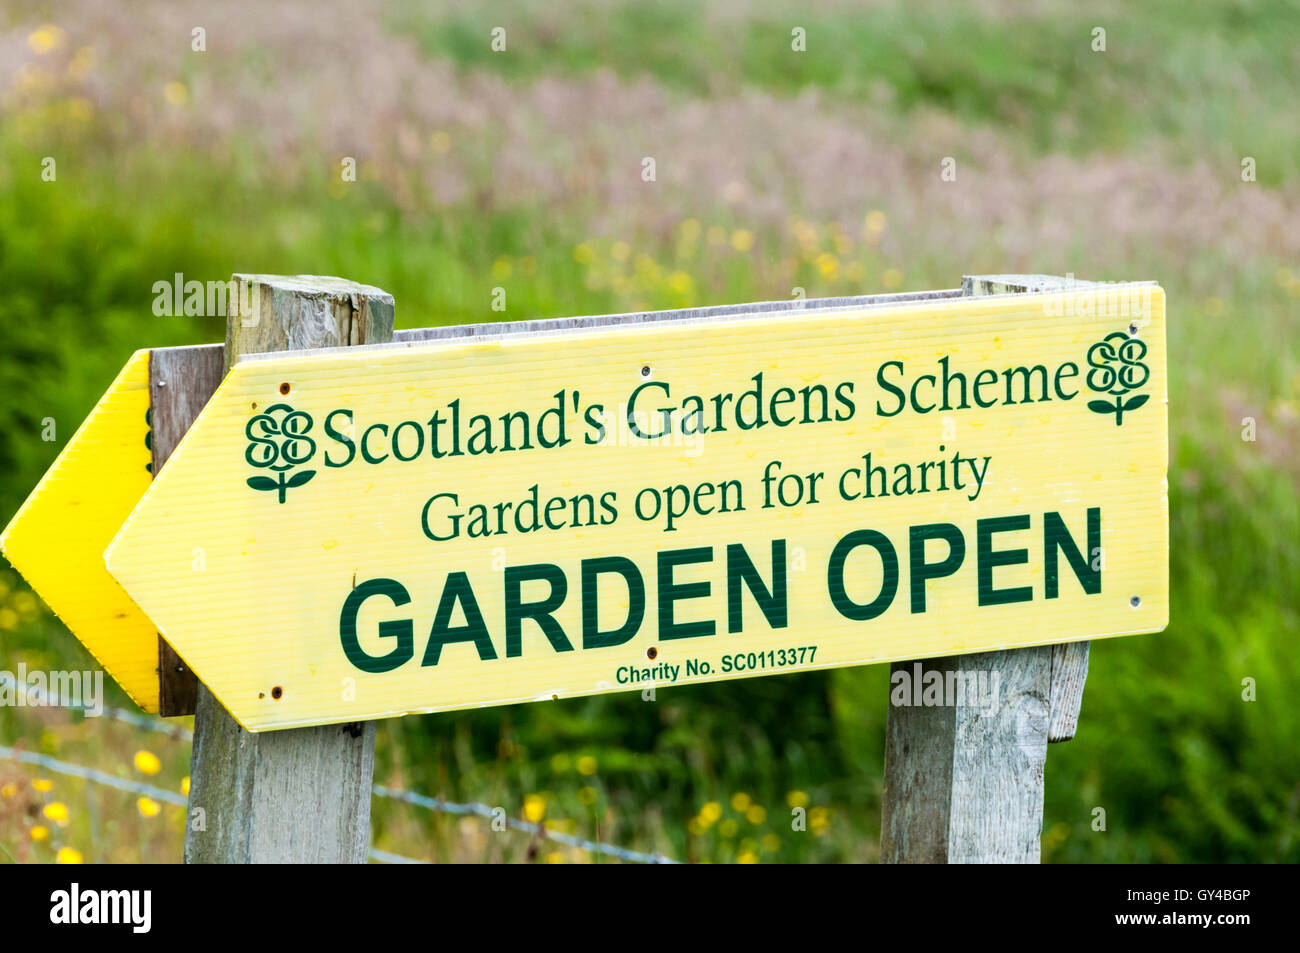 Scotland's Gardens Scheme sign for Garden Open for Charity. Stock Photo